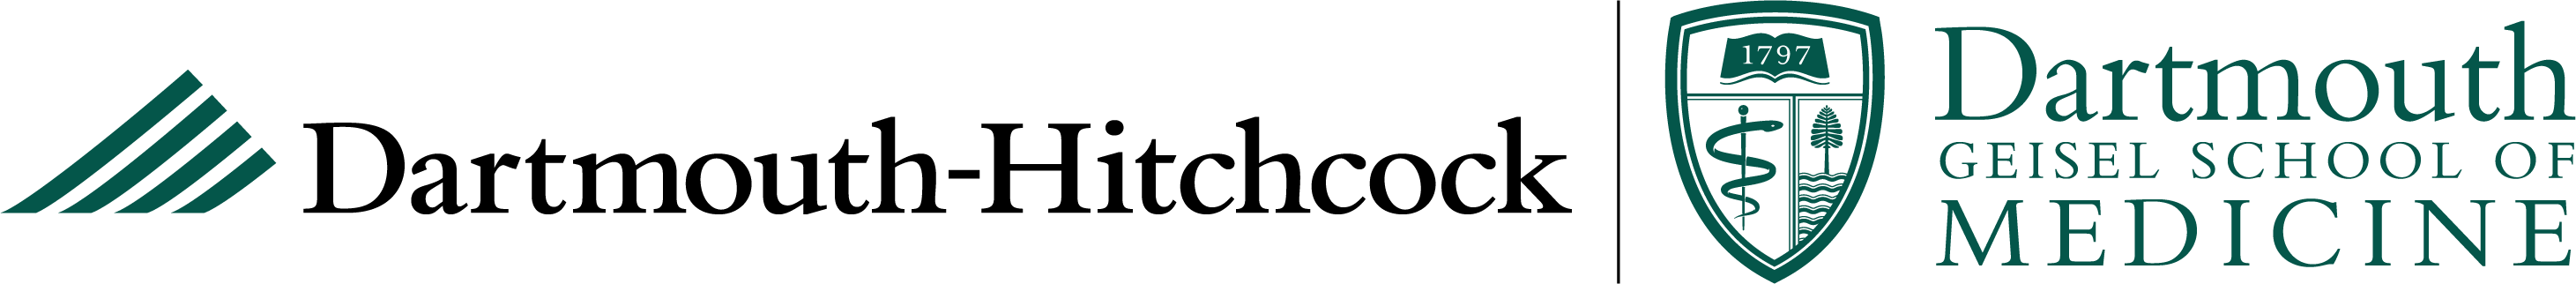 Dartmouth-Hitchcock and Geisel Logo